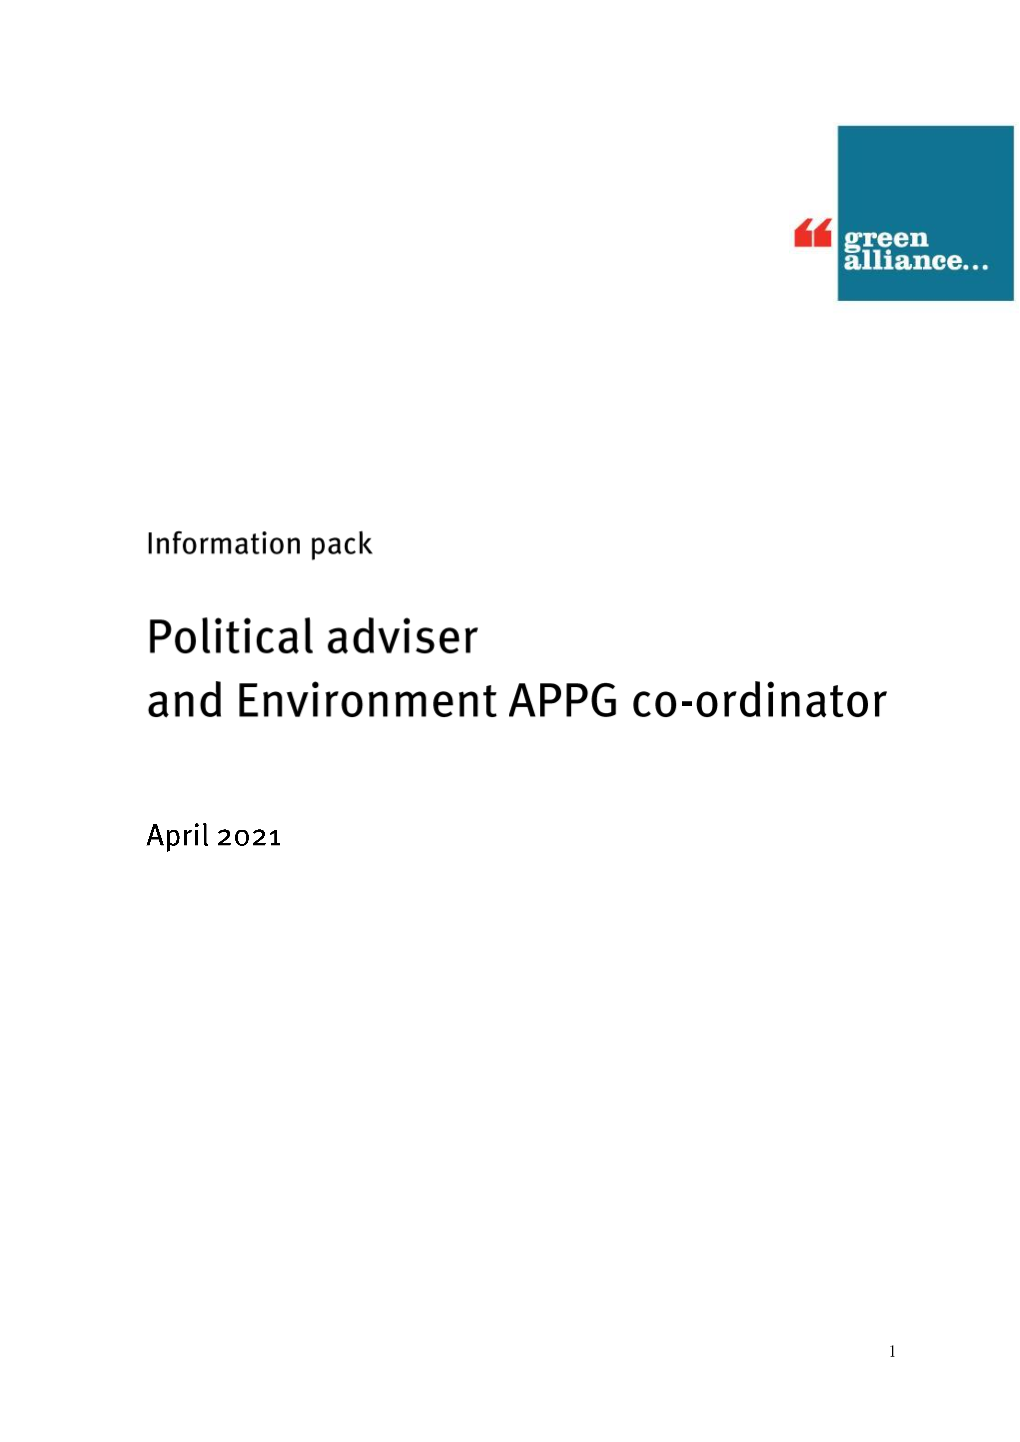 Political Adviser and APPG Co